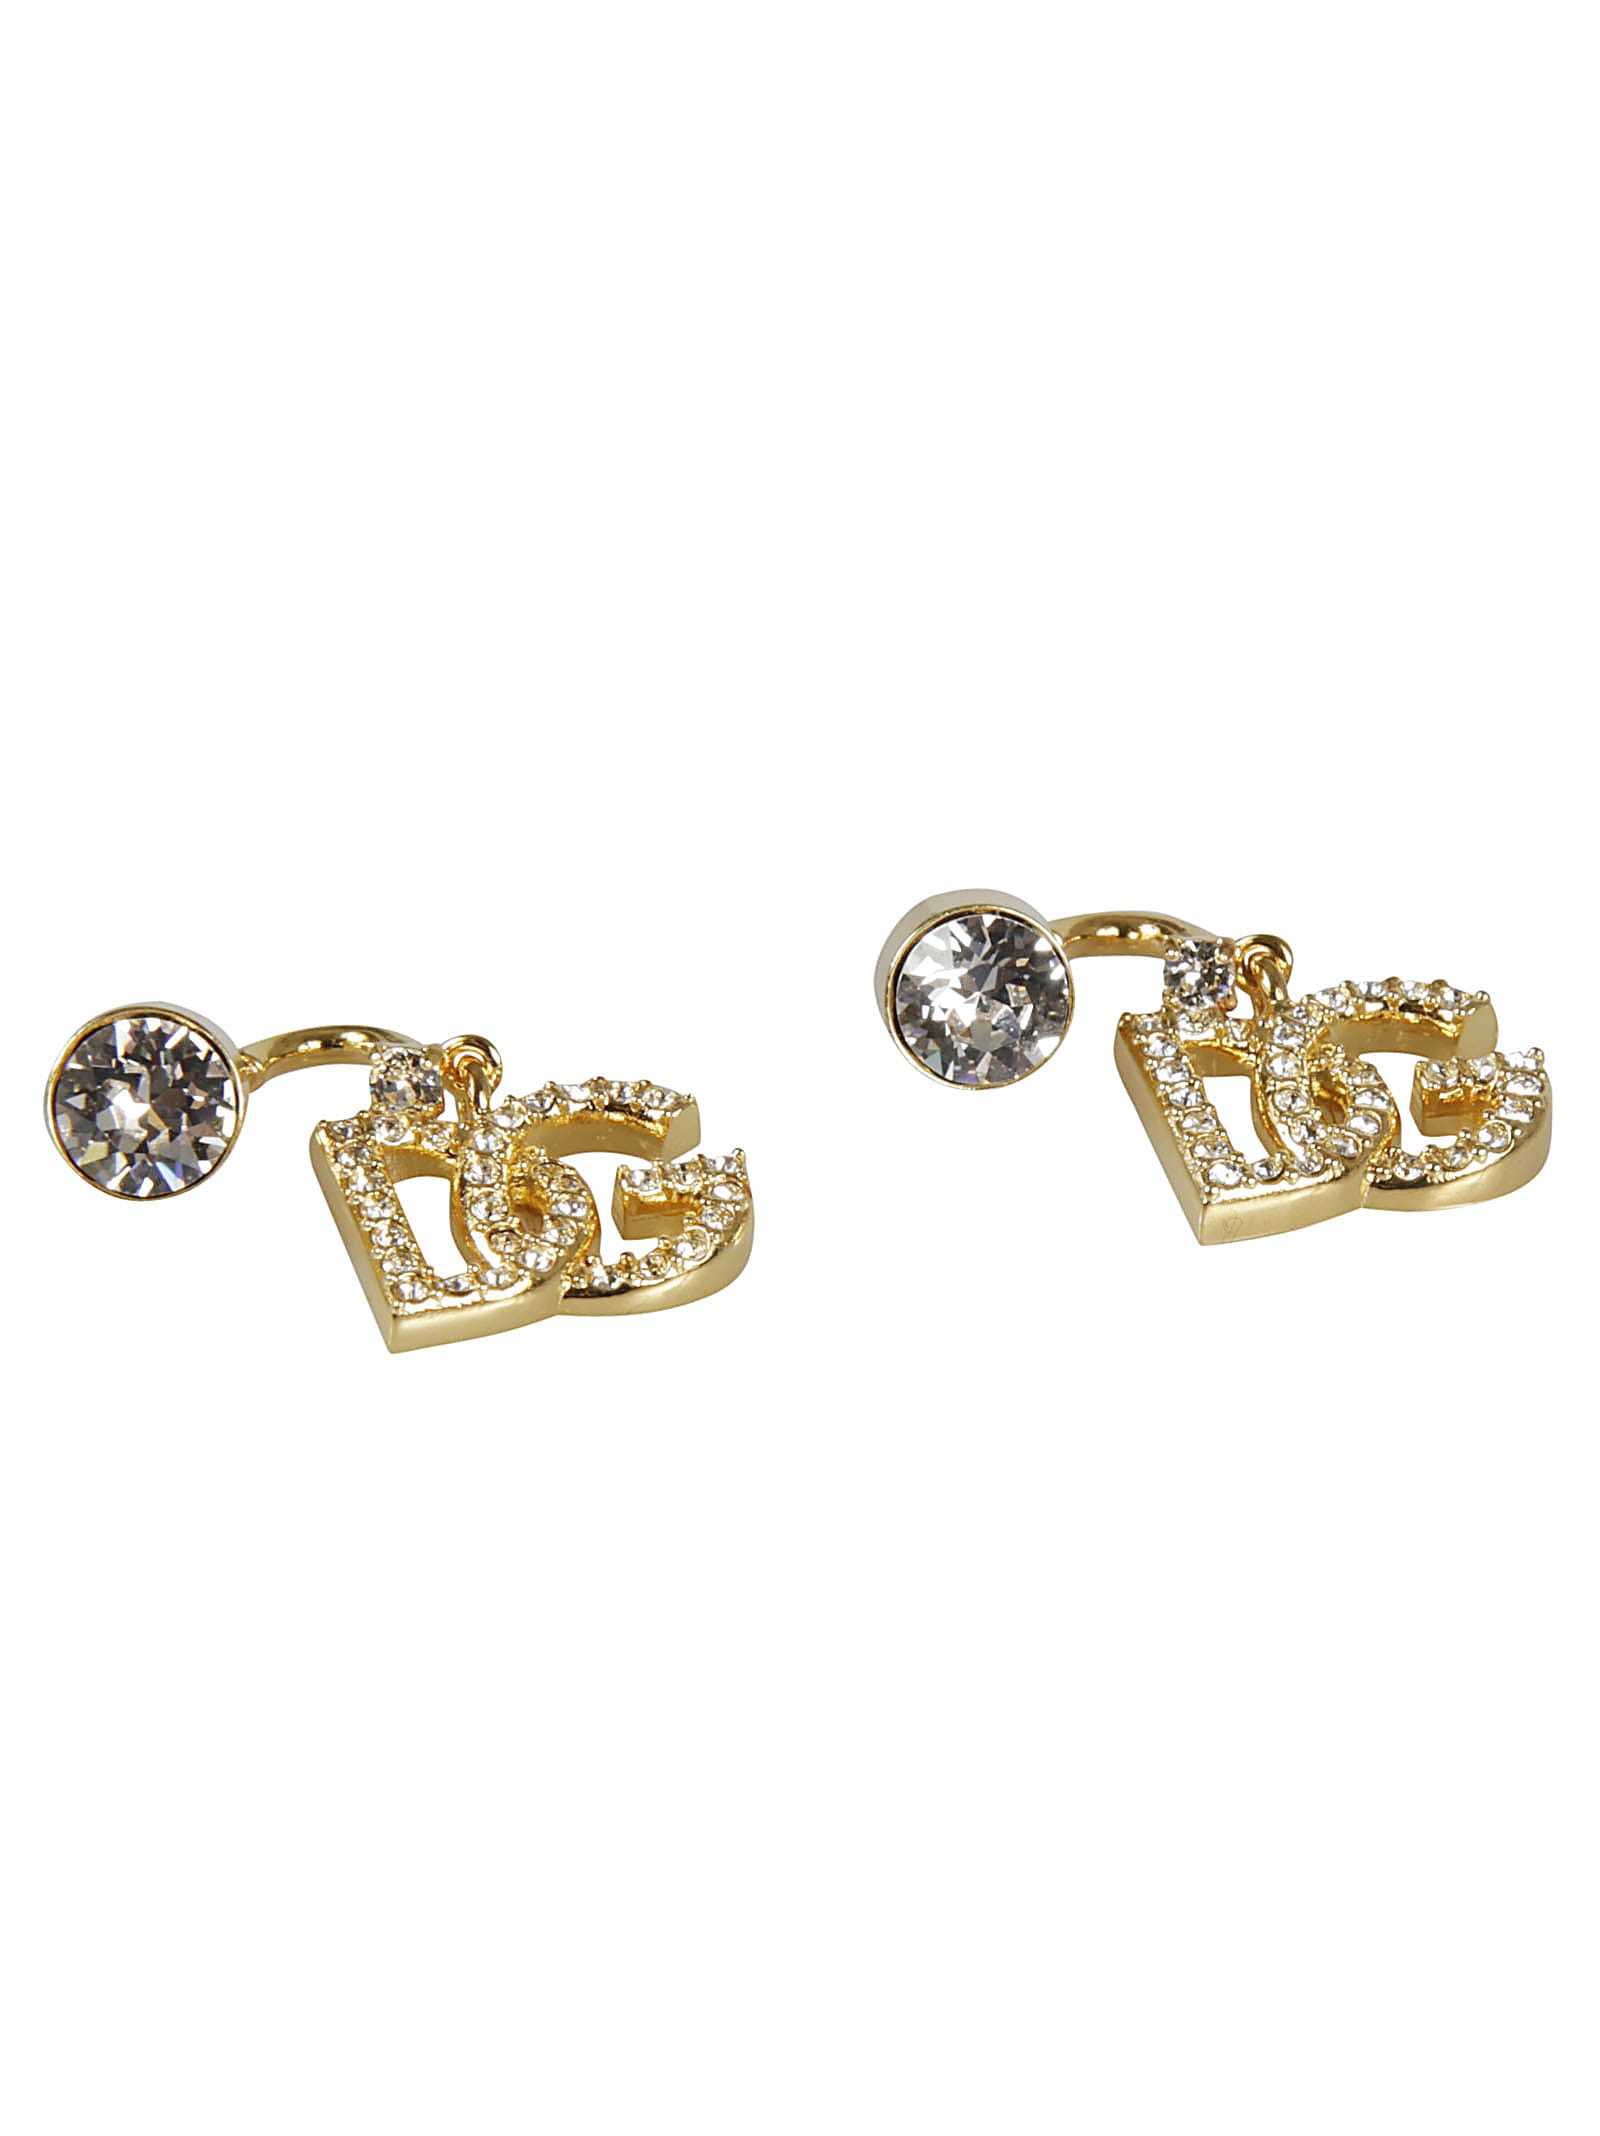 Dolce & Gabbana Logo Embellished Earrings